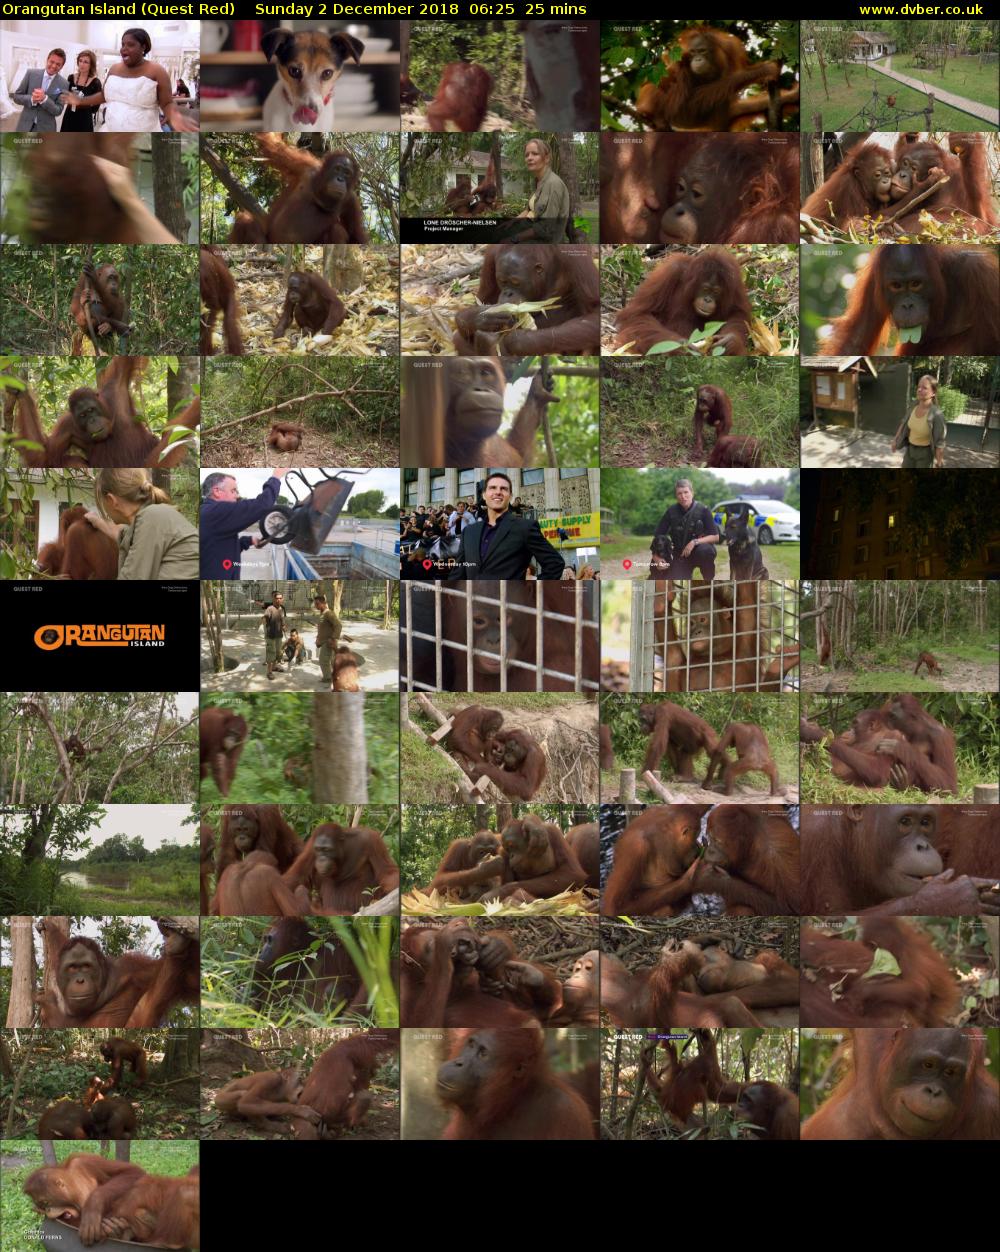 Orangutan Island (Quest Red) Sunday 2 December 2018 06:25 - 06:50